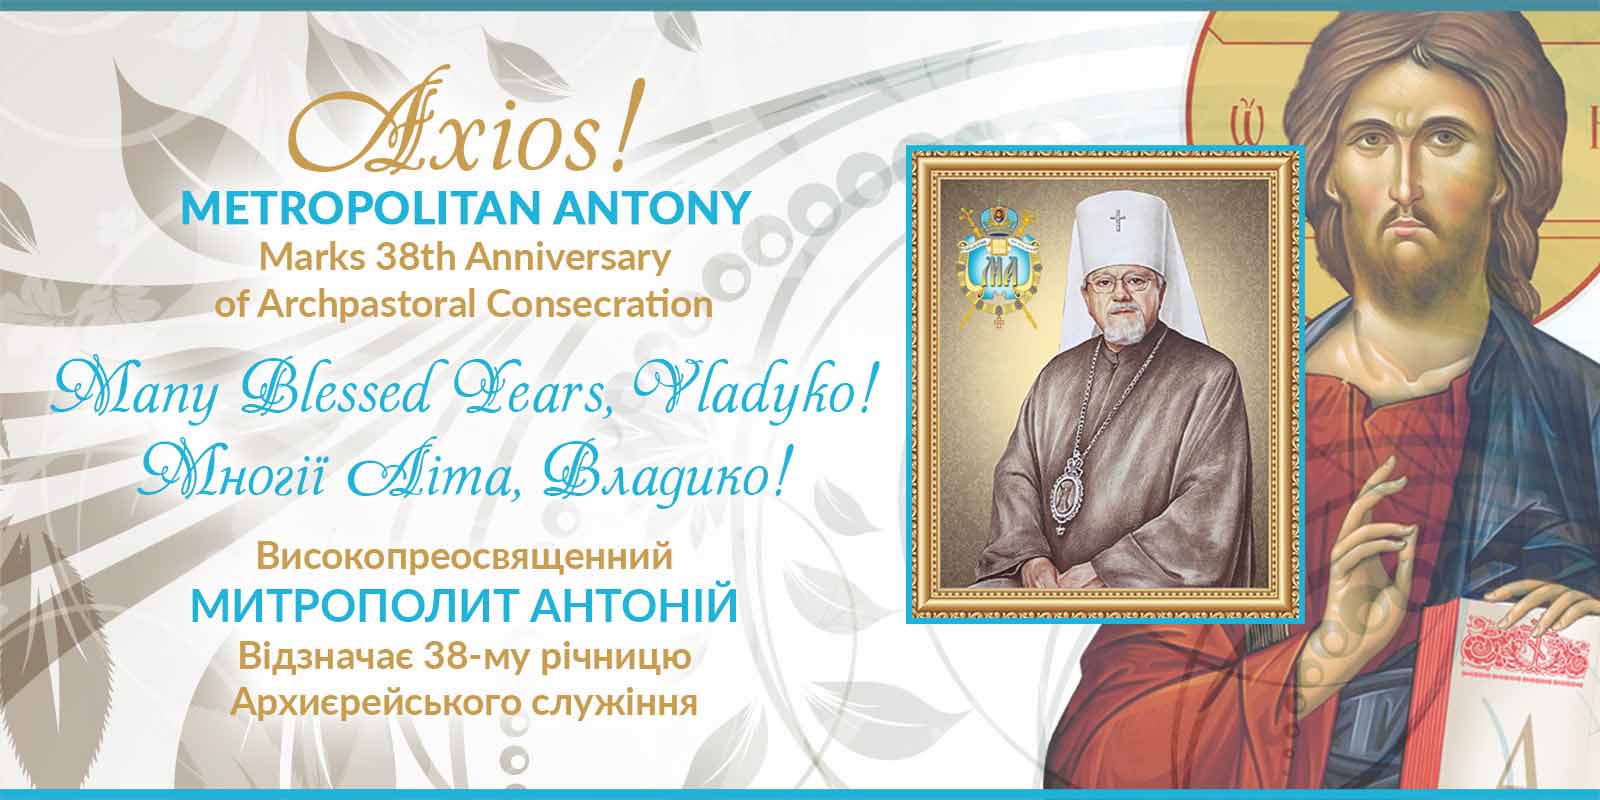 Metropolitan Antony Marks 38th Anniversary of Archpastoral Consecration